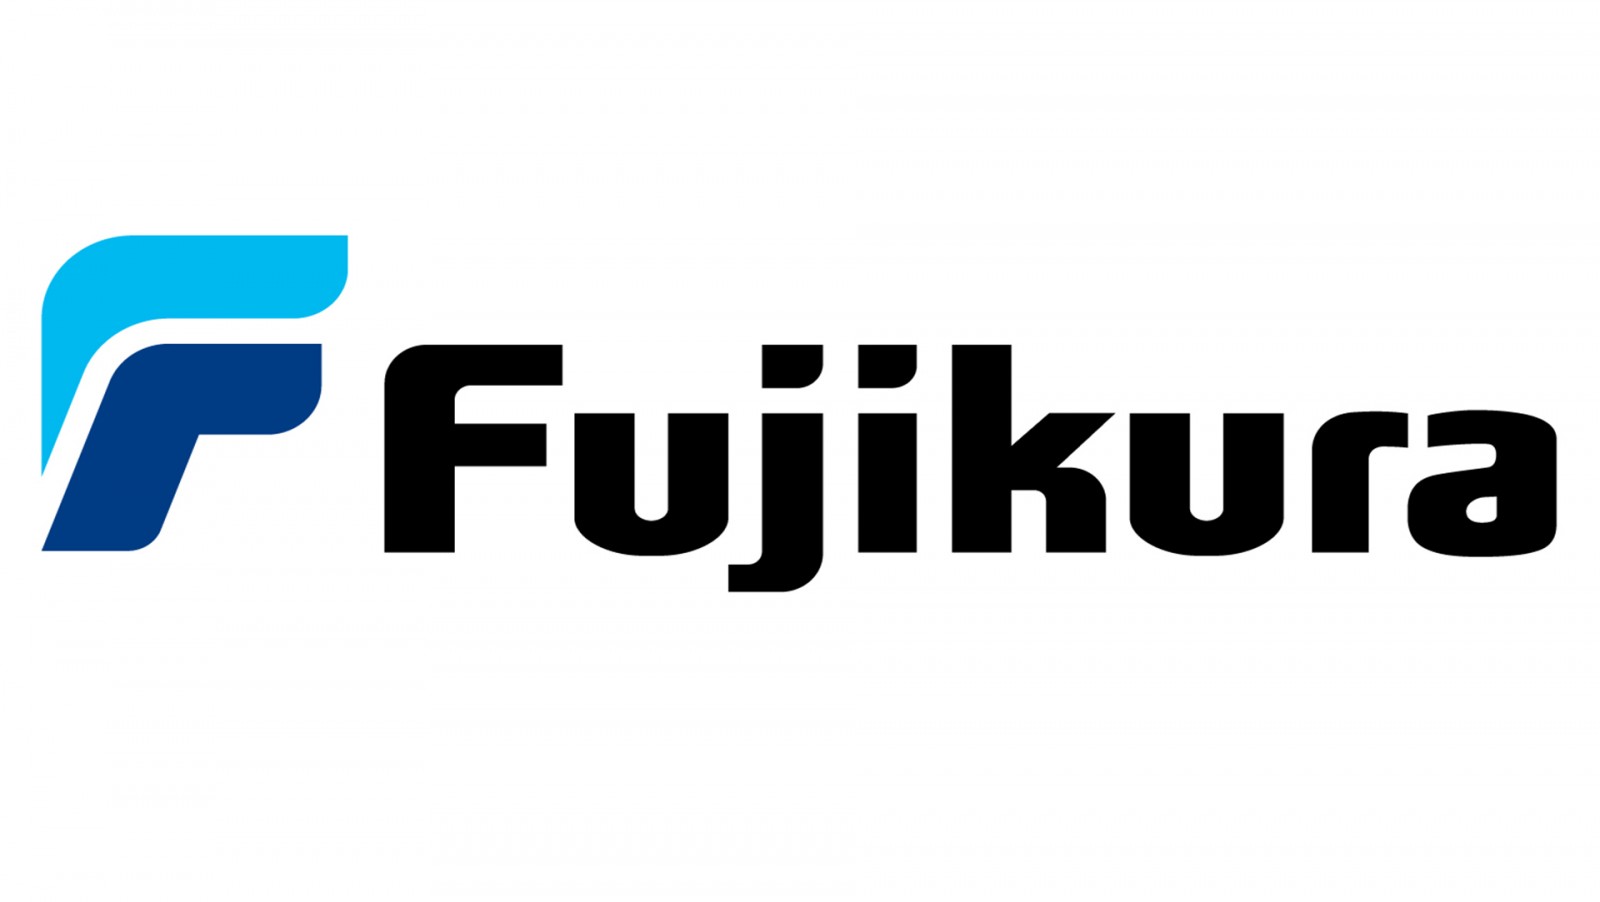 Fujikura